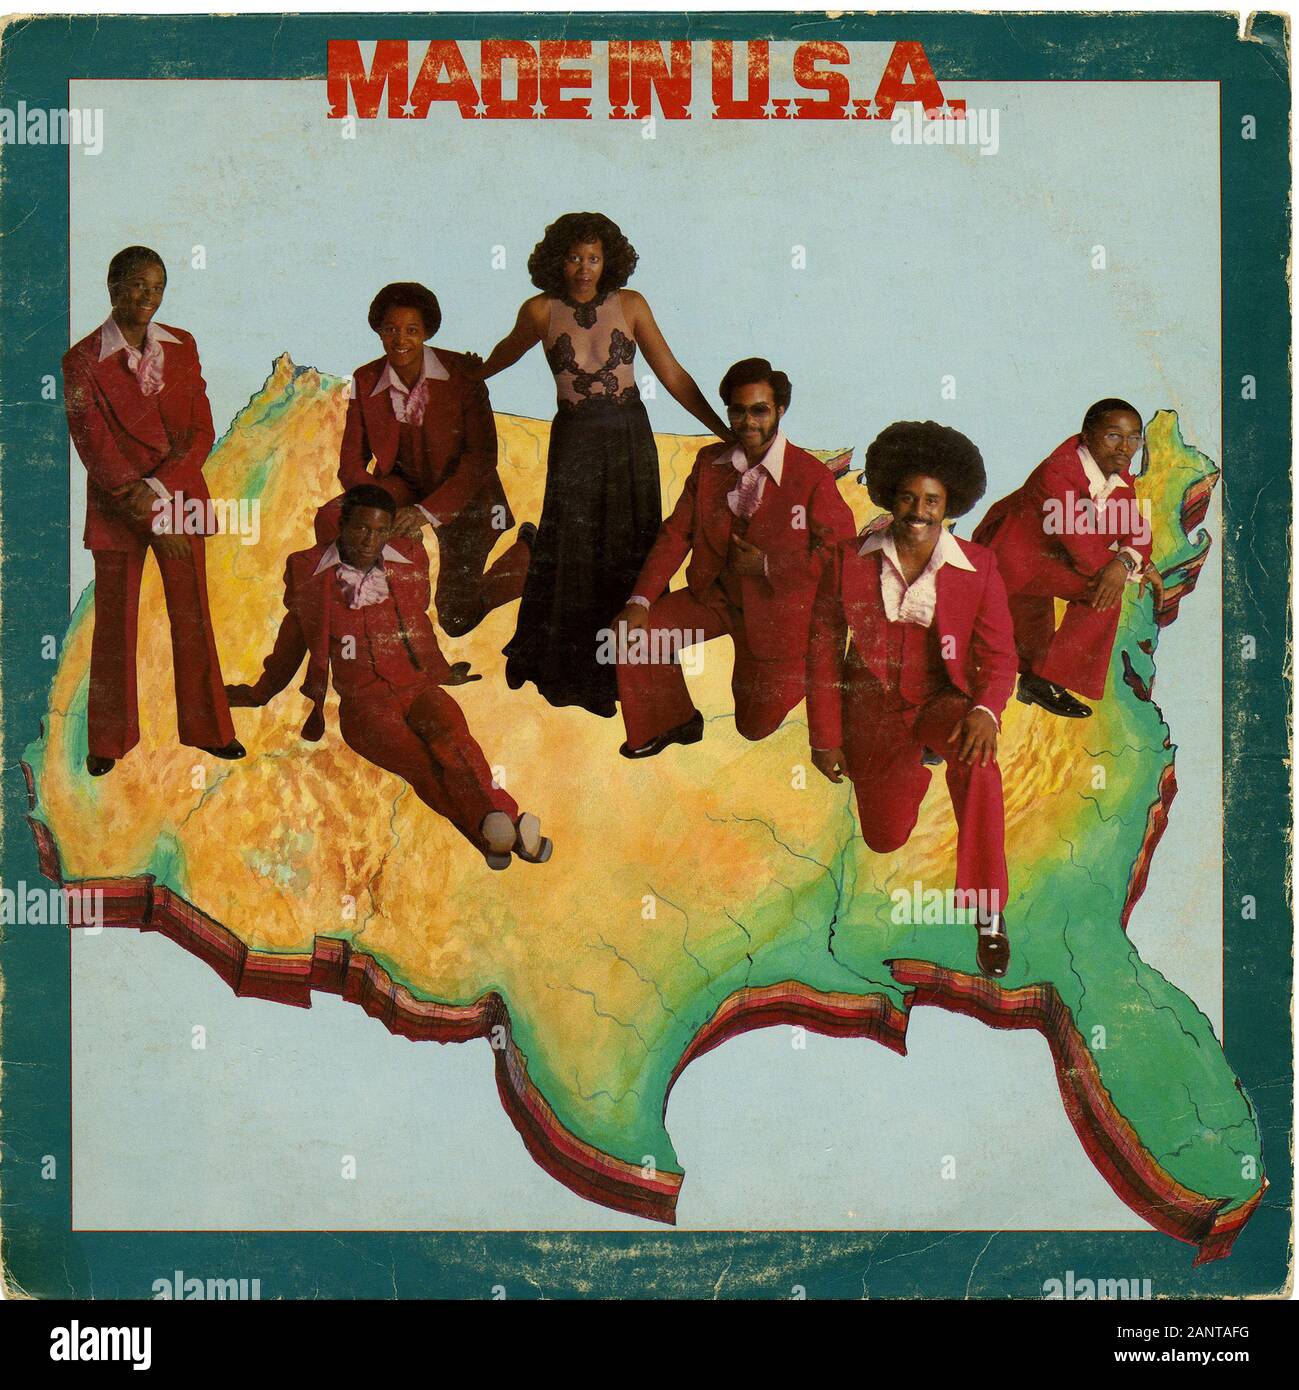 Made in U.S.A. - Classic vintage album in vinile Foto Stock